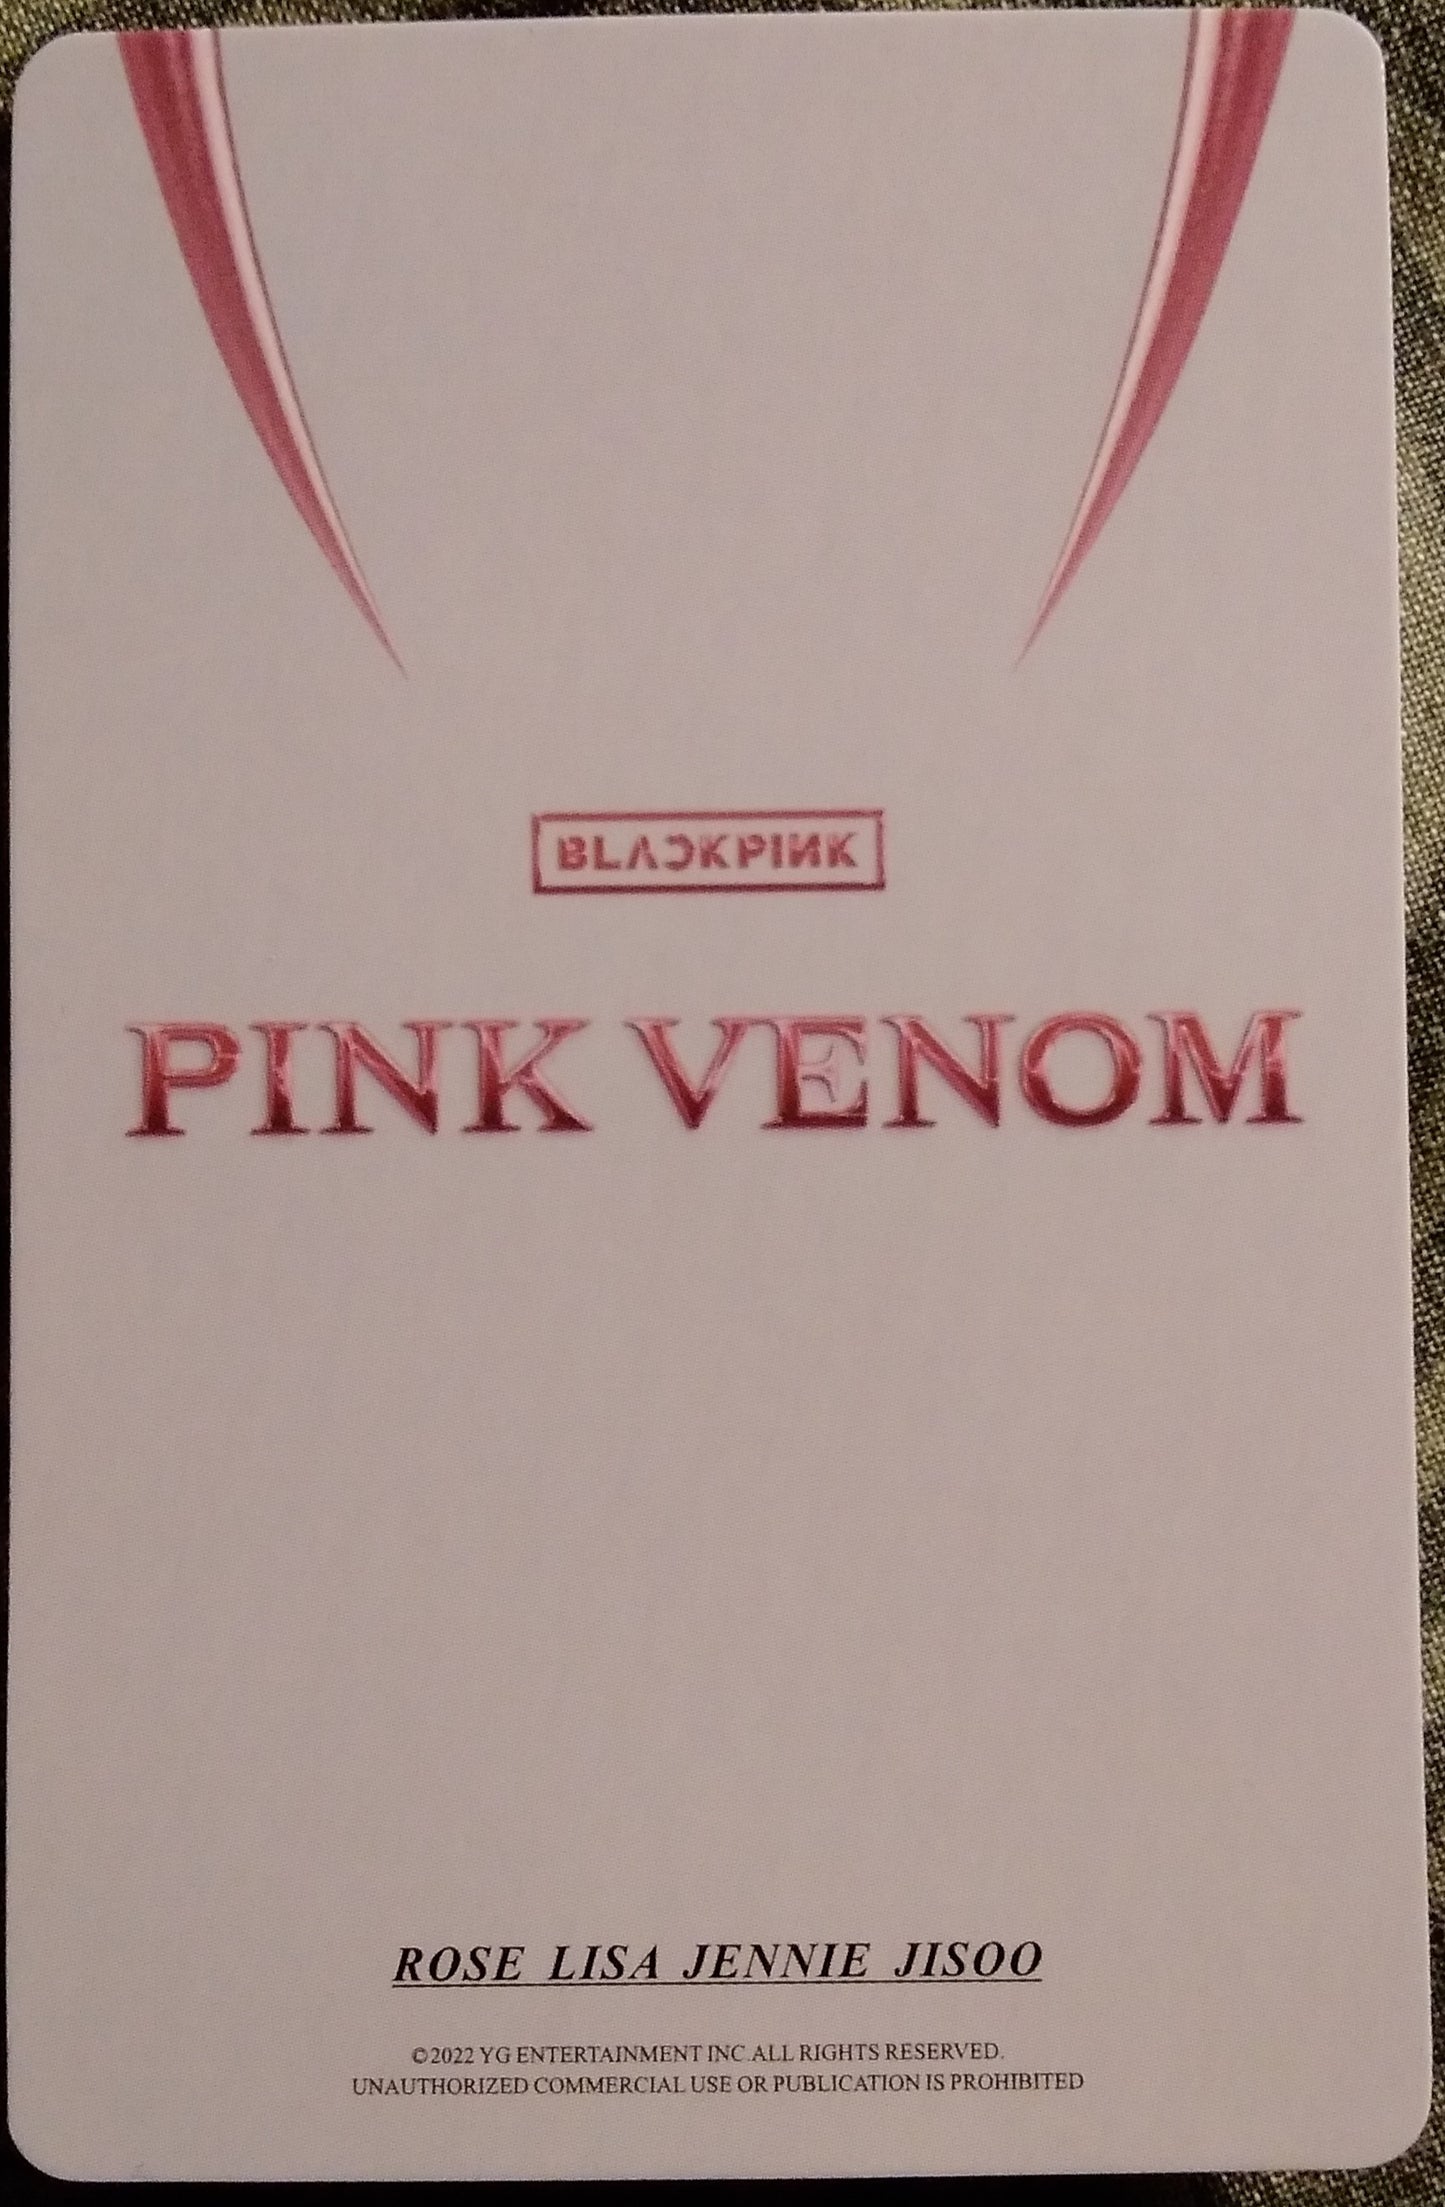 PHhotocard  BLACKPINK  Pink venom Lisa